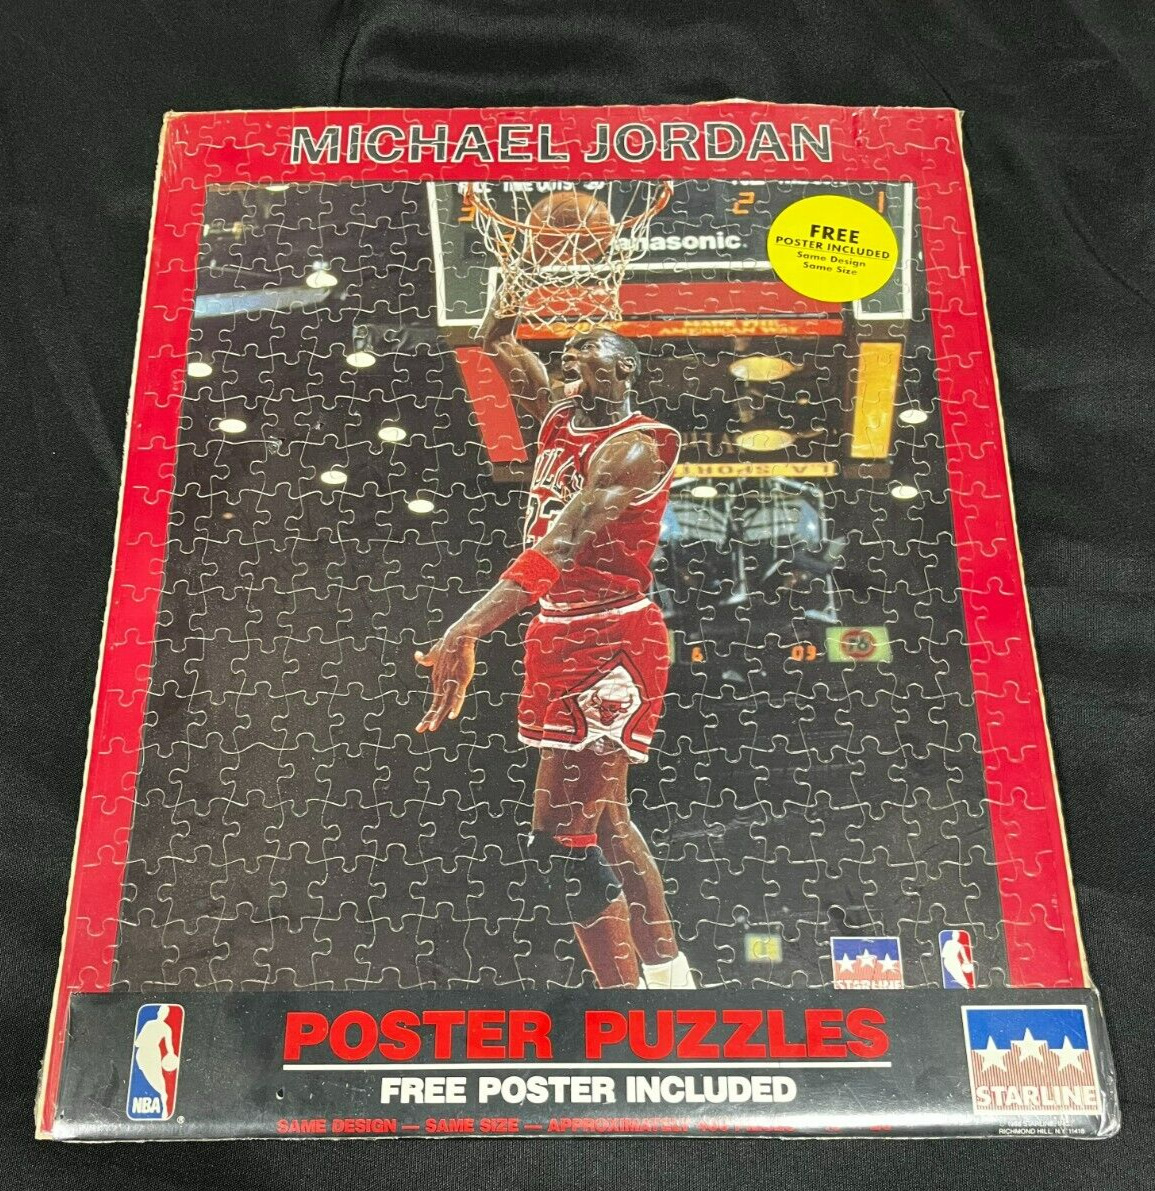 1988 Starline Michael Jordan Chicago Bulls Poster Puzzles 16x20\